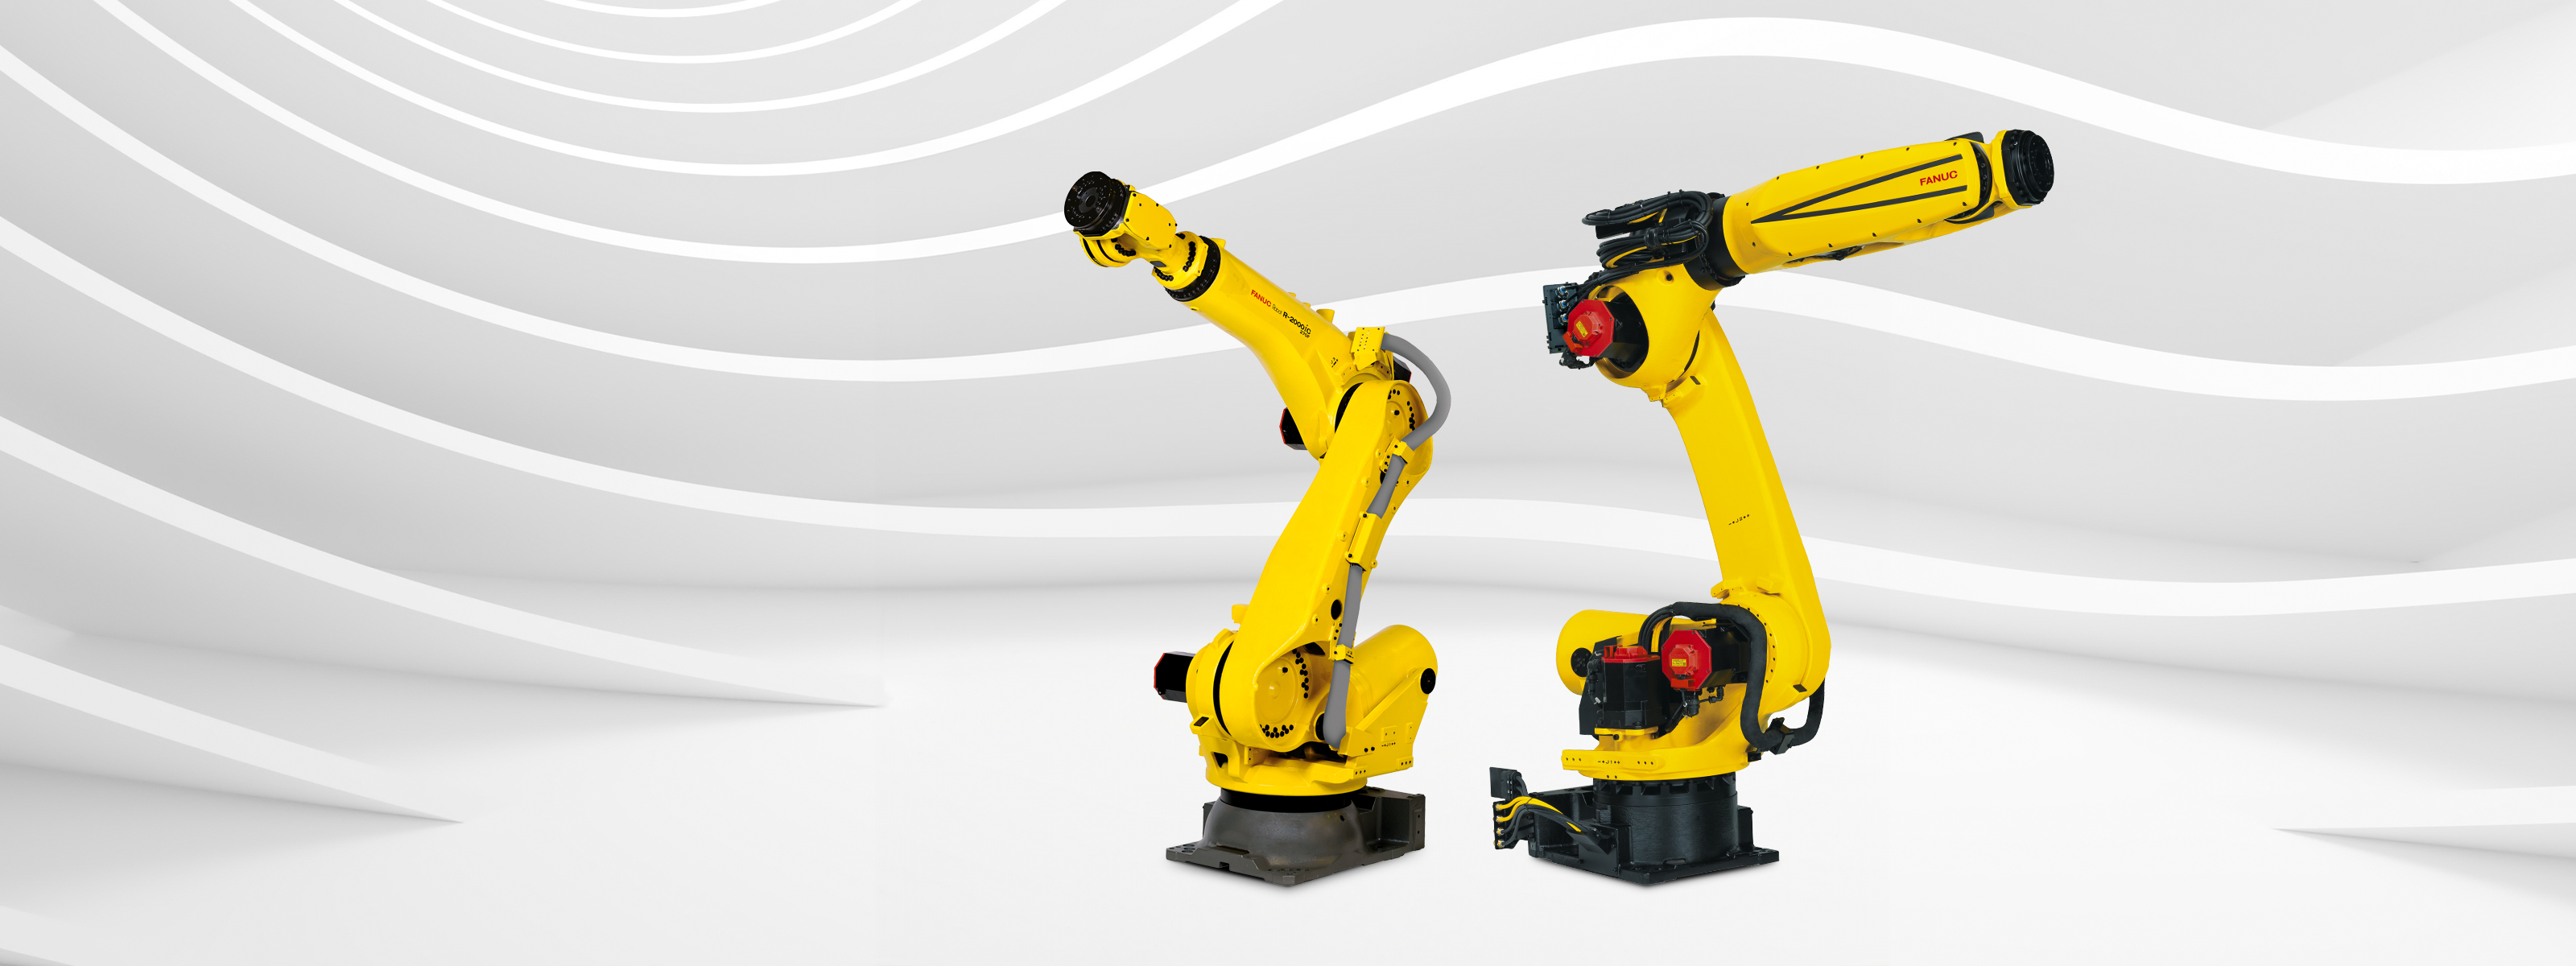 7 R-2000 industrial robots in industry hall